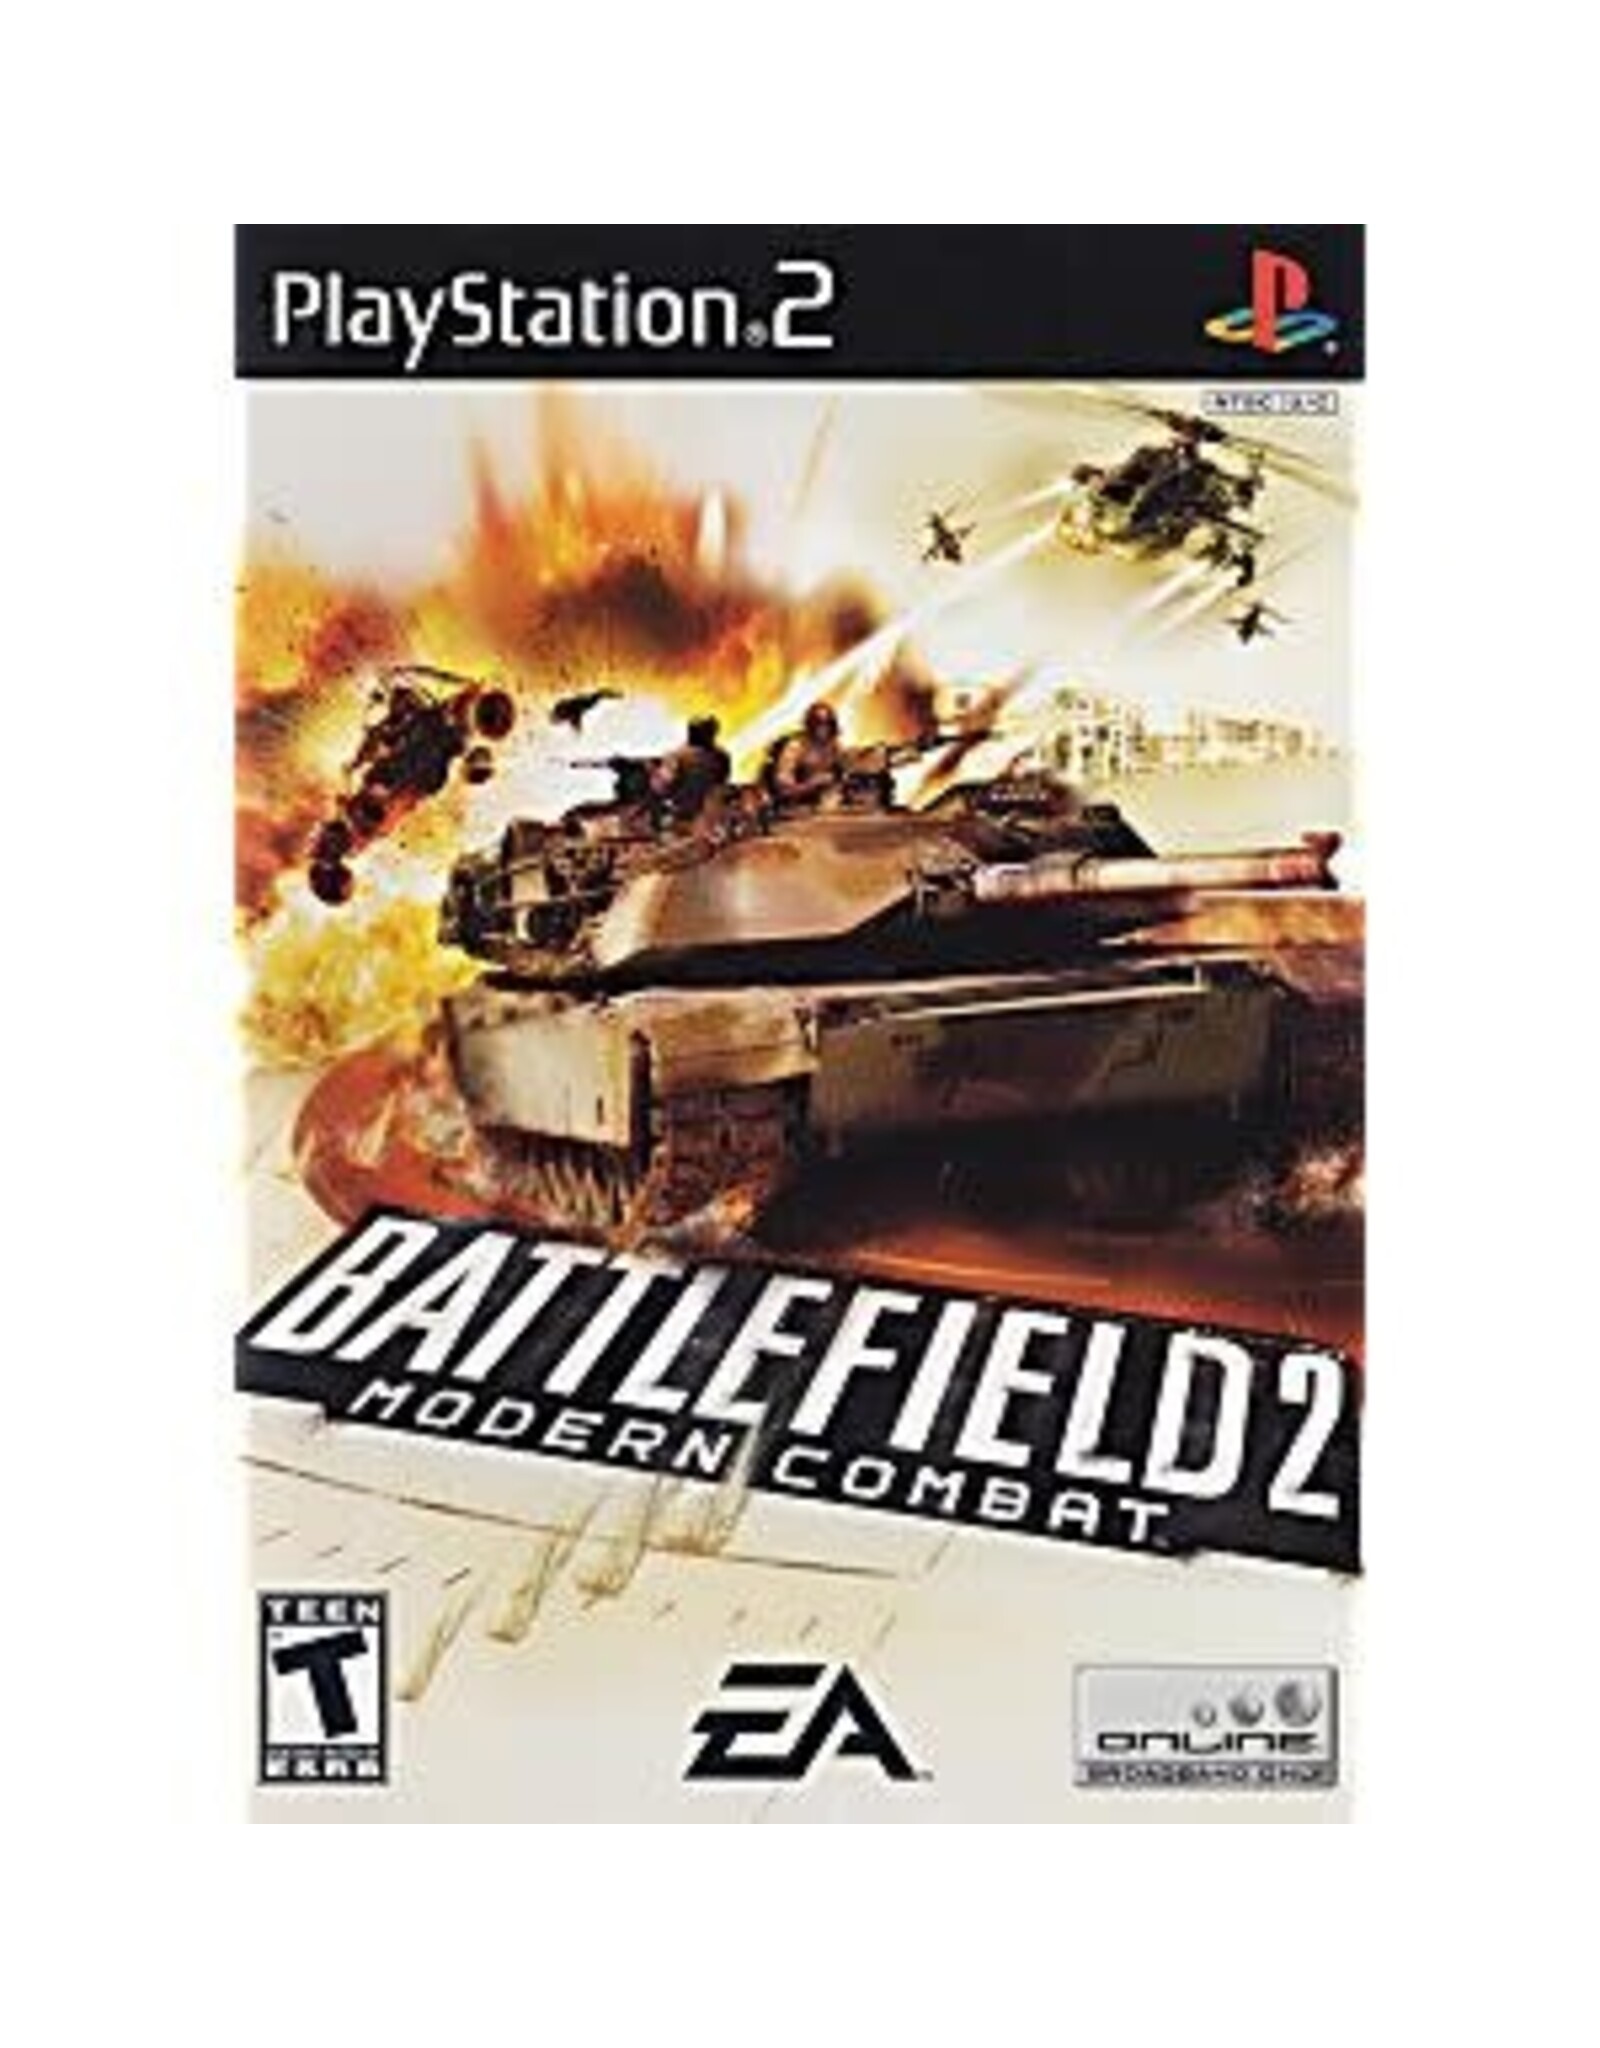 Playstation 2 Battlefield 2 Modern Combat (CiB, Damaged Sleeve)